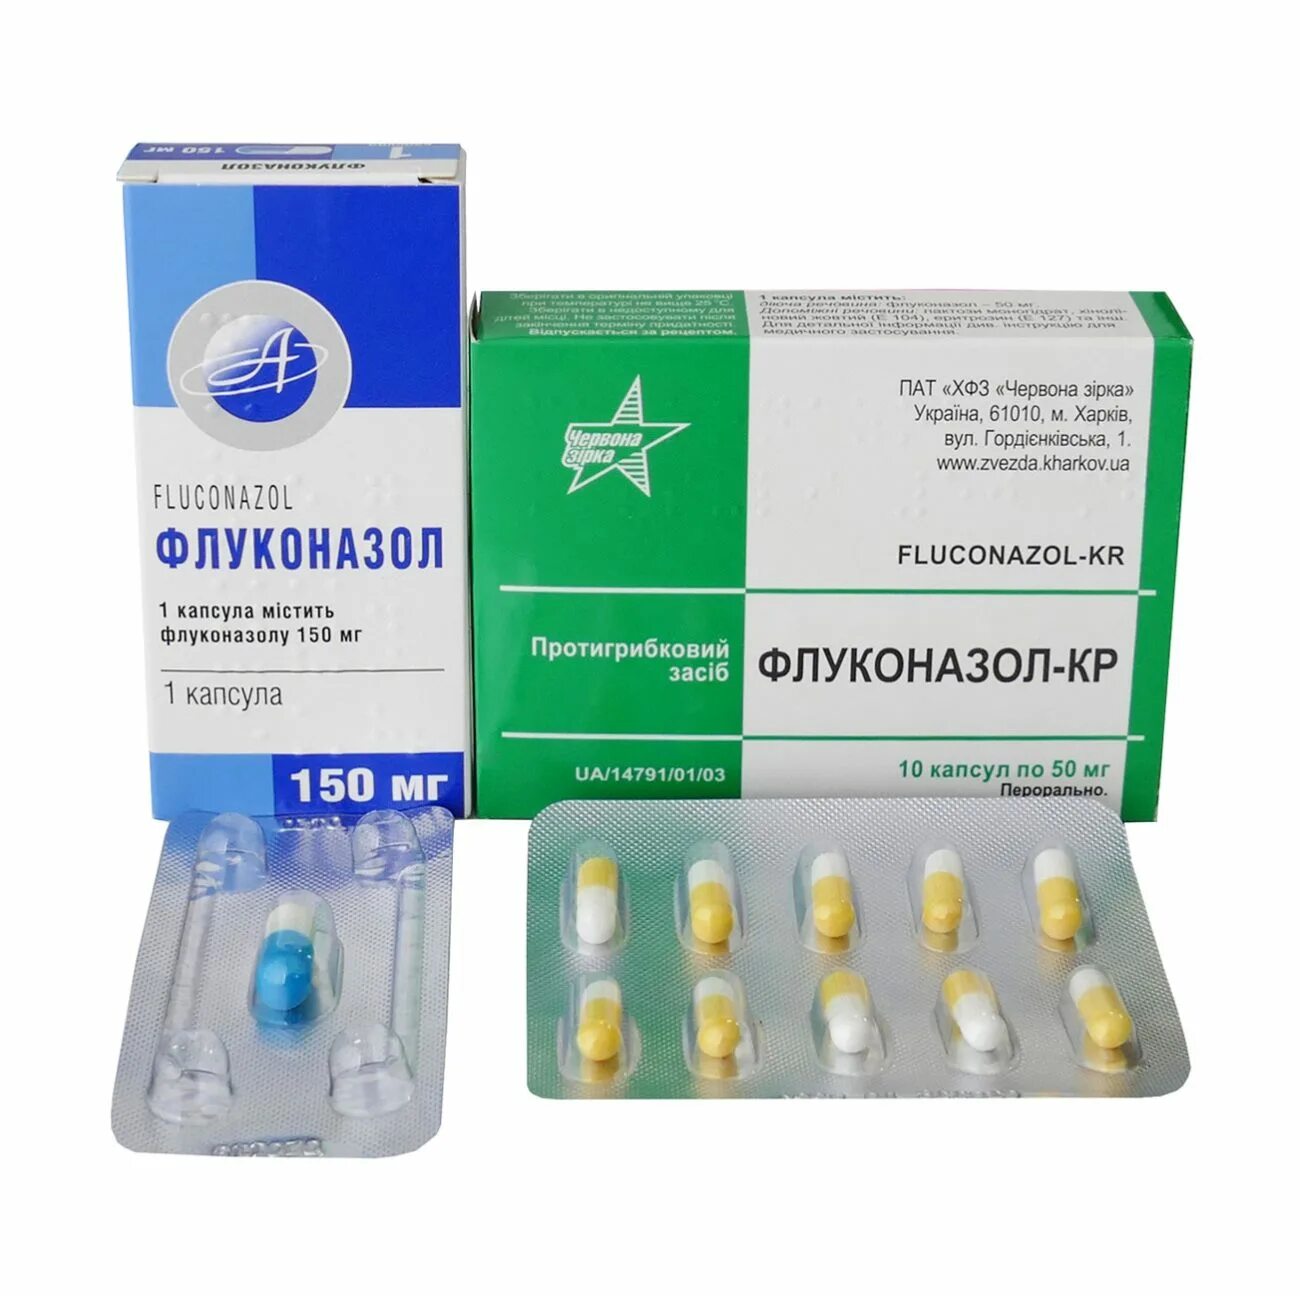 Флуконазол капсулы 400 мг. Таблетки от молочницы флуконазол 150. Капсула от молочницы флуконазол 150. Противогрибковые капсулы флуконазол.